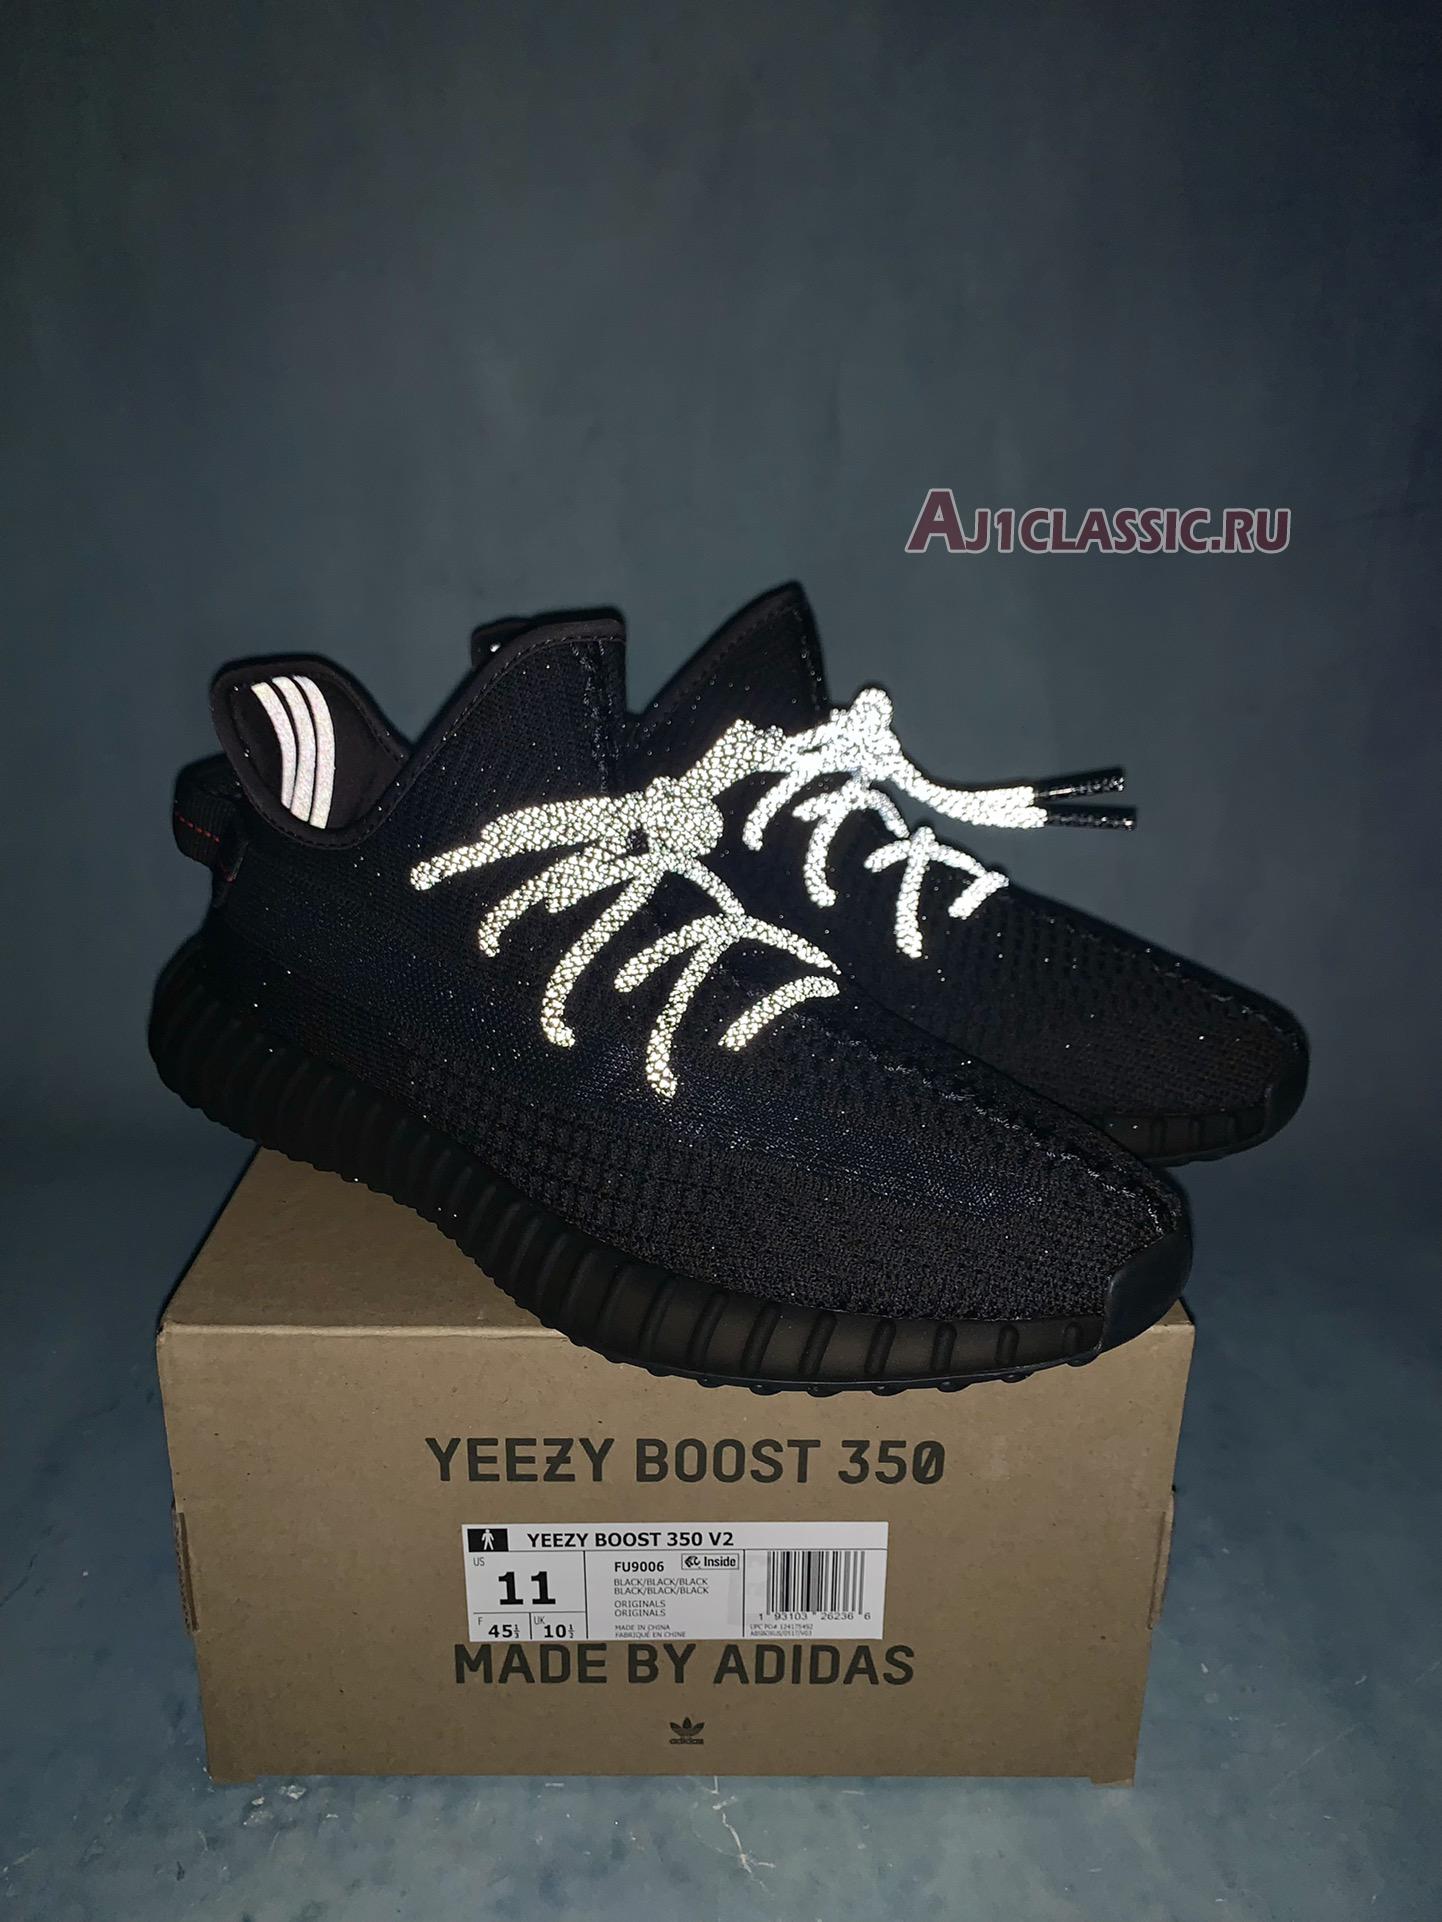 Adidas Yeezy Boost 350 V2 Black Non-Reflective FU9006-2 Black/Black/Black Sneakers